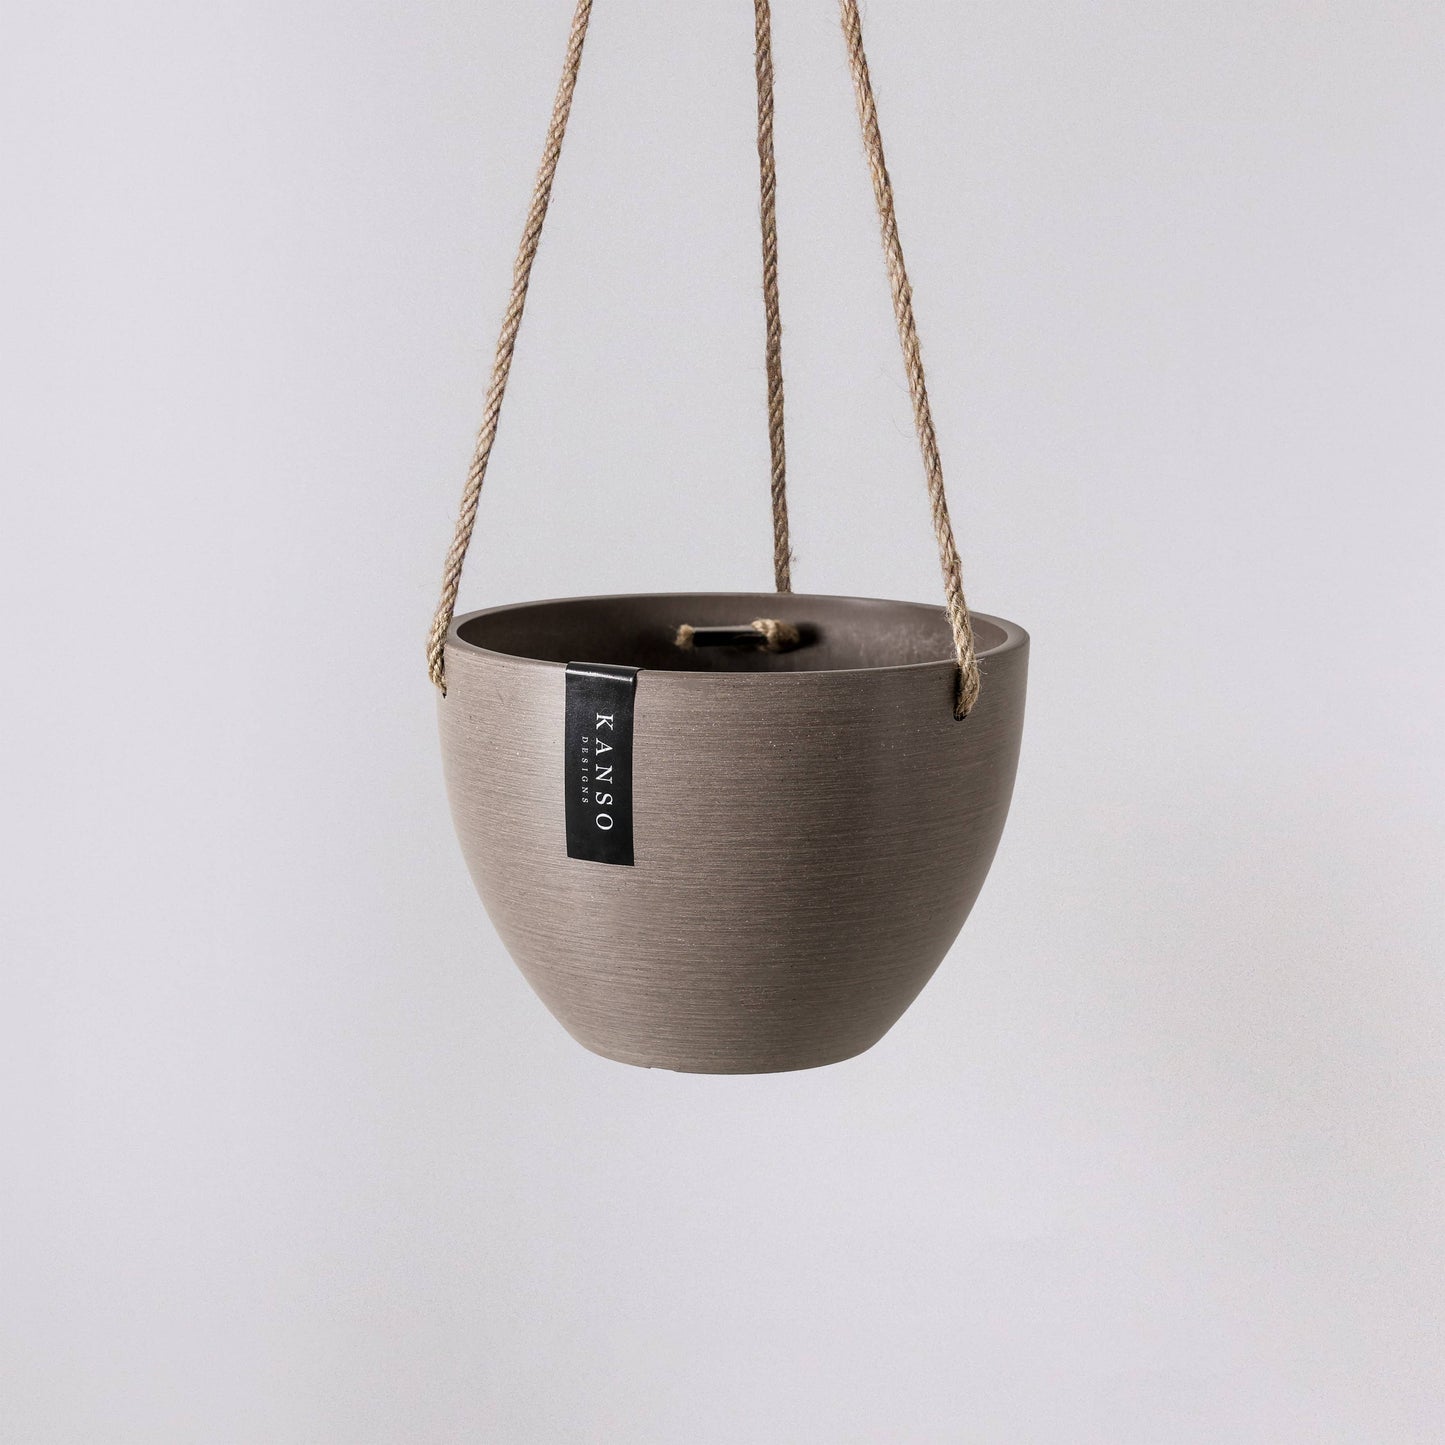 Kanso Designs - 8" or 12" Signature Stone Hanging Planter Pot: 12" Planter